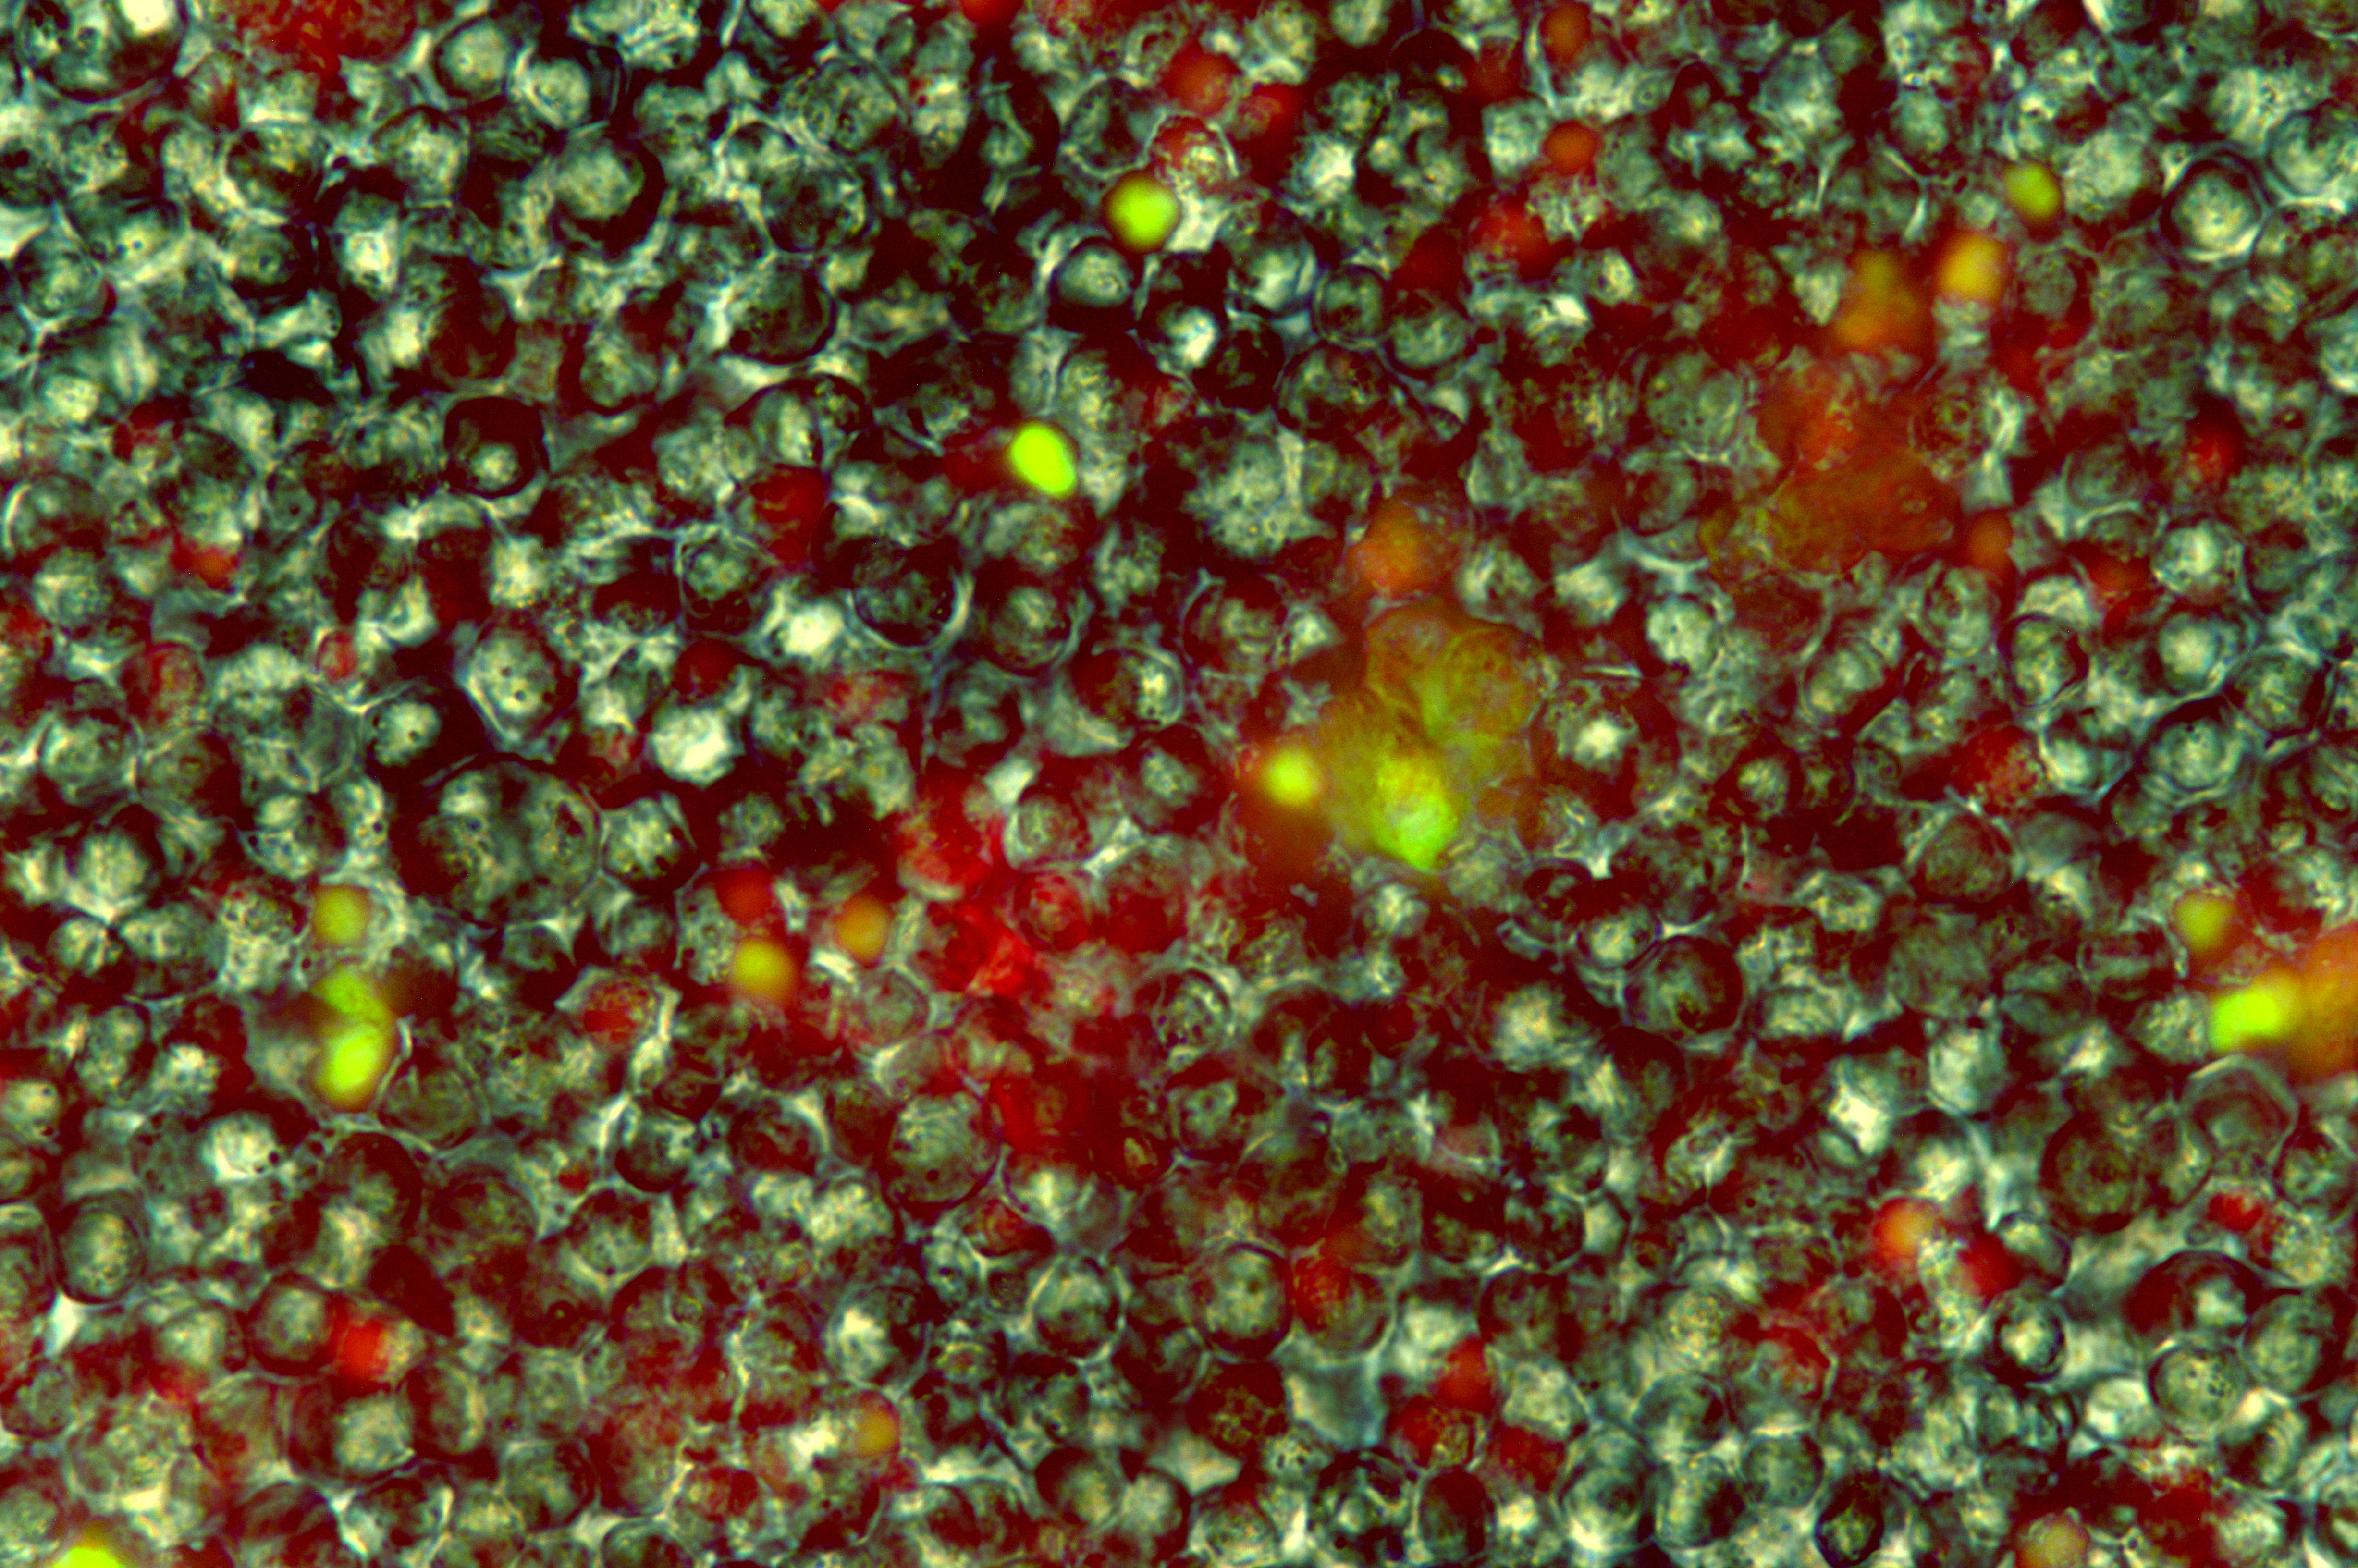 Live cells image (adenocarcinoma + monocytes)